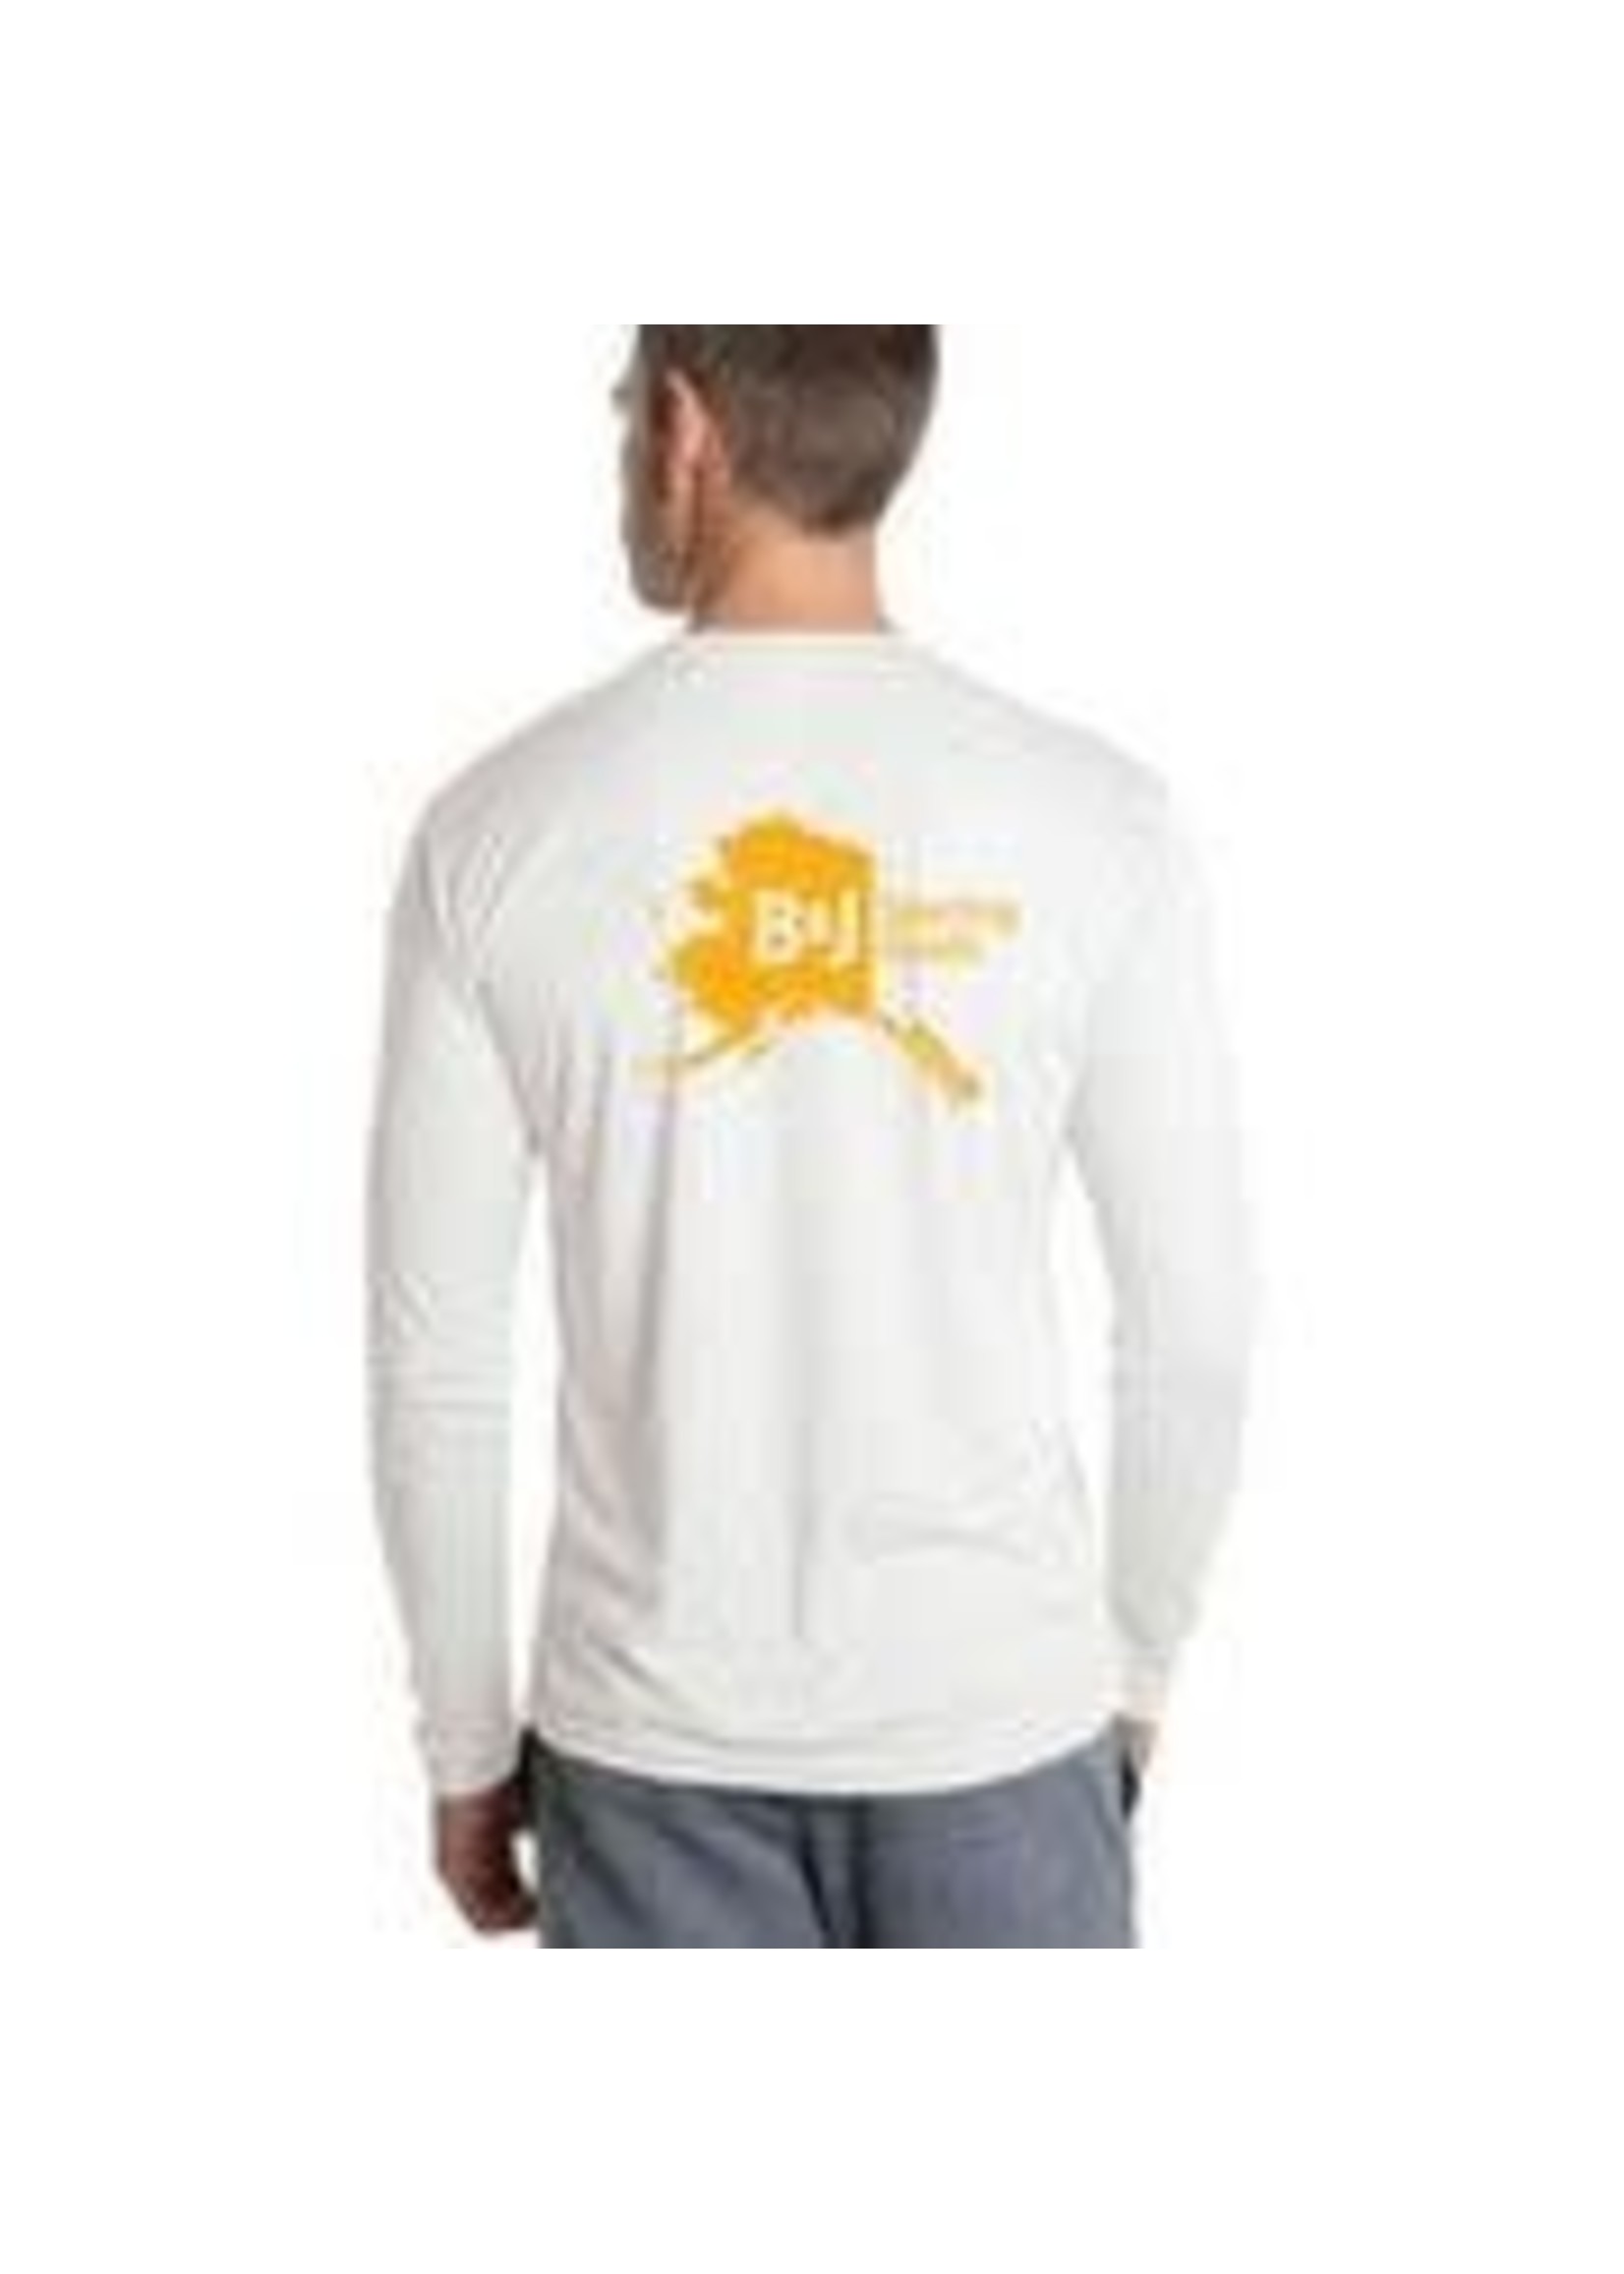 B&J Sporting Goods B&J Sun Shirt LS